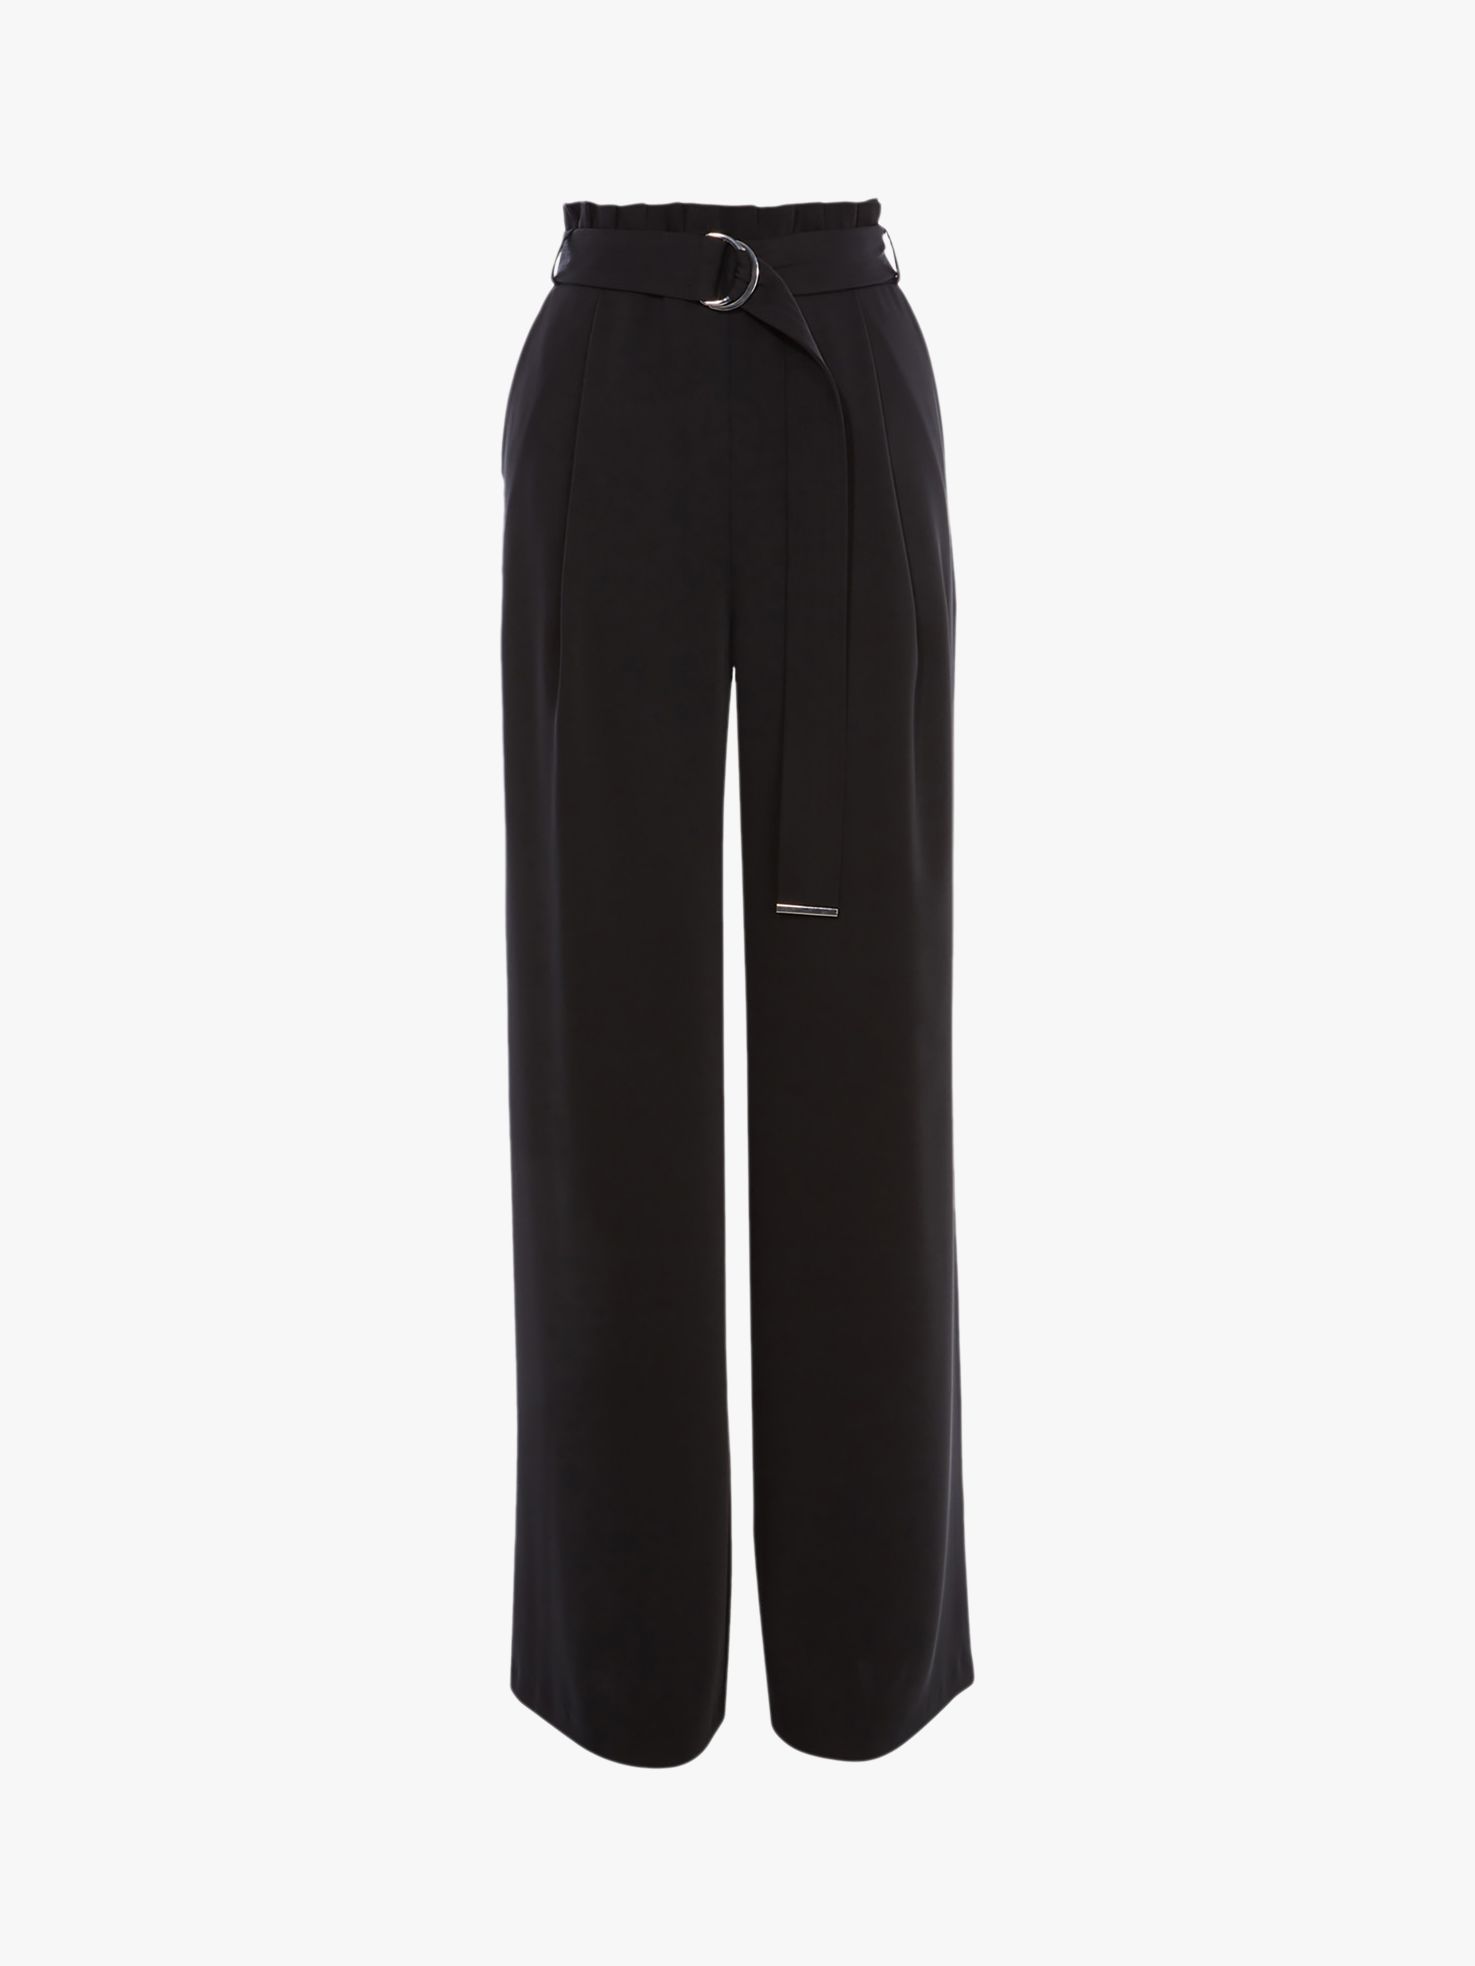 Karen Millen Wide-Leg Tailored Trousers, Black at John Lewis & Partners